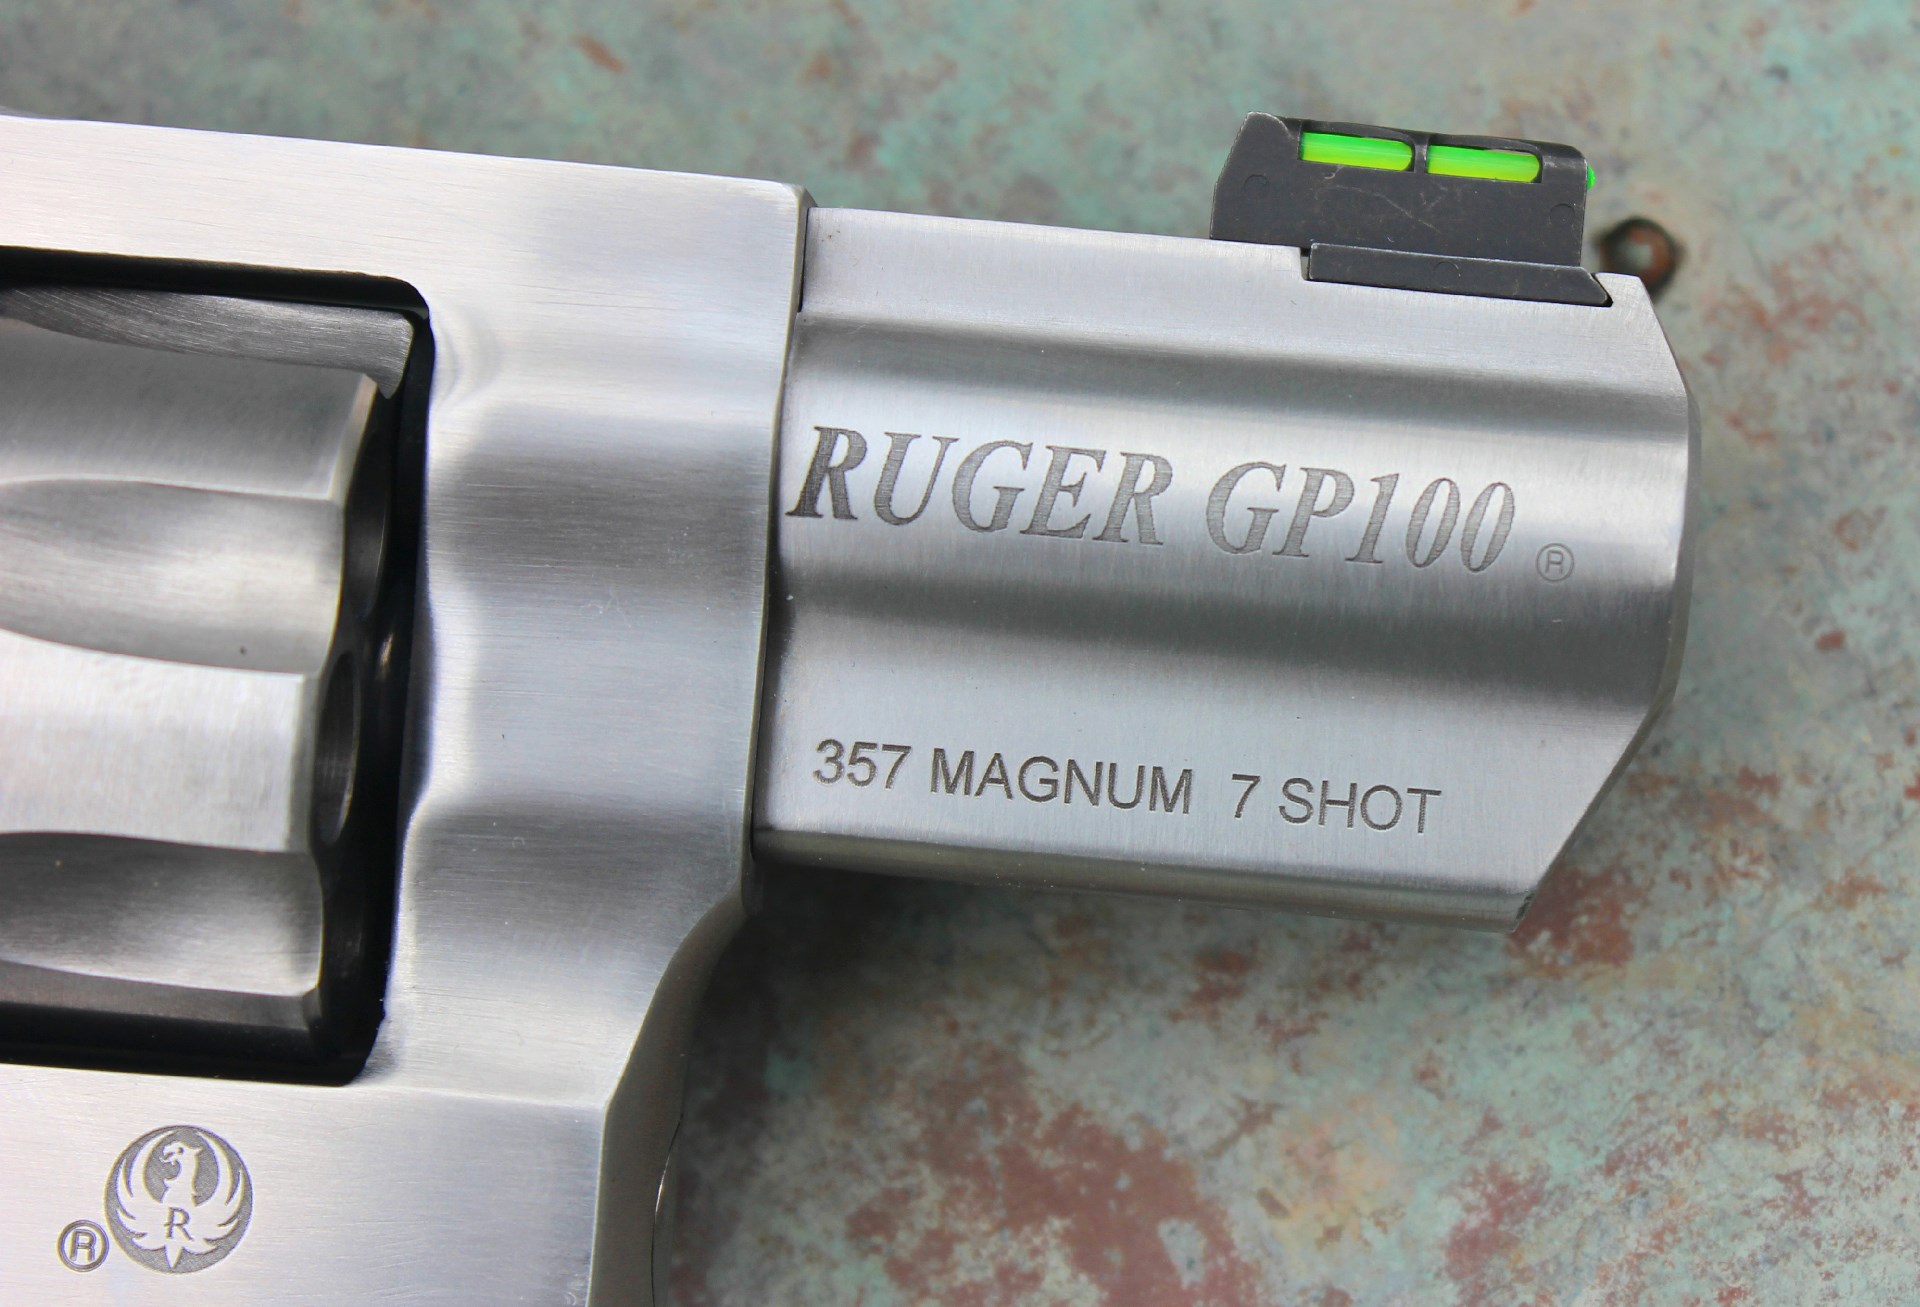 Ruger GP-100 7-shot revolver barrel closeup marking stamping gun barrel details logo text stainless steel fiber-optic sight revolver cylinder crop